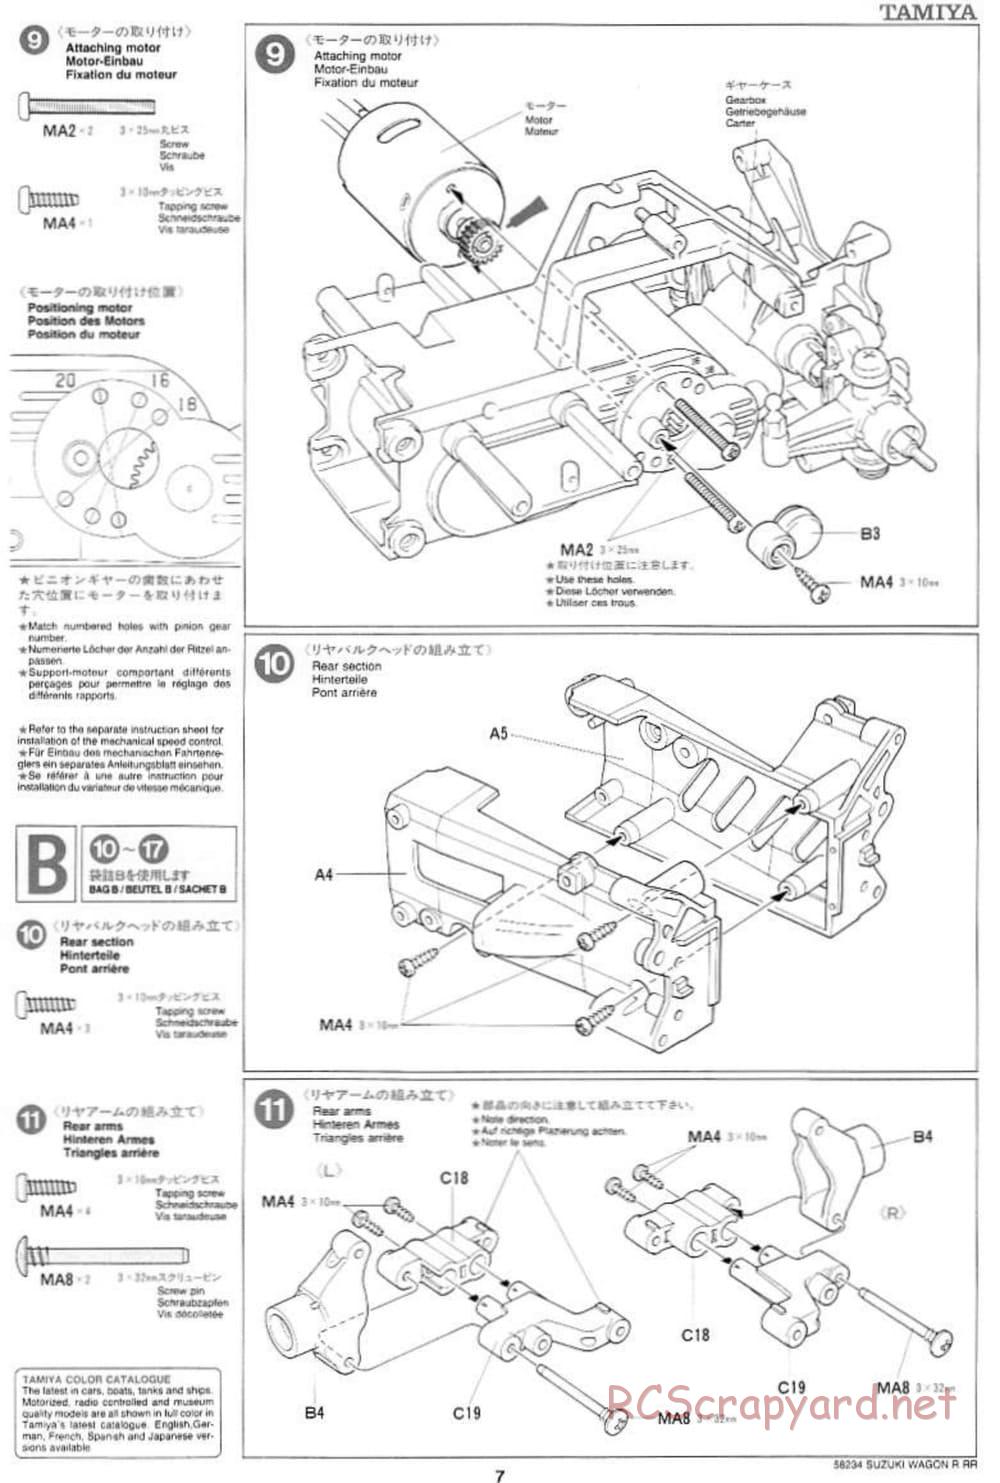 Tamiya - Suzuki WagonR-RR - M03 Chassis - Manual - Page 7